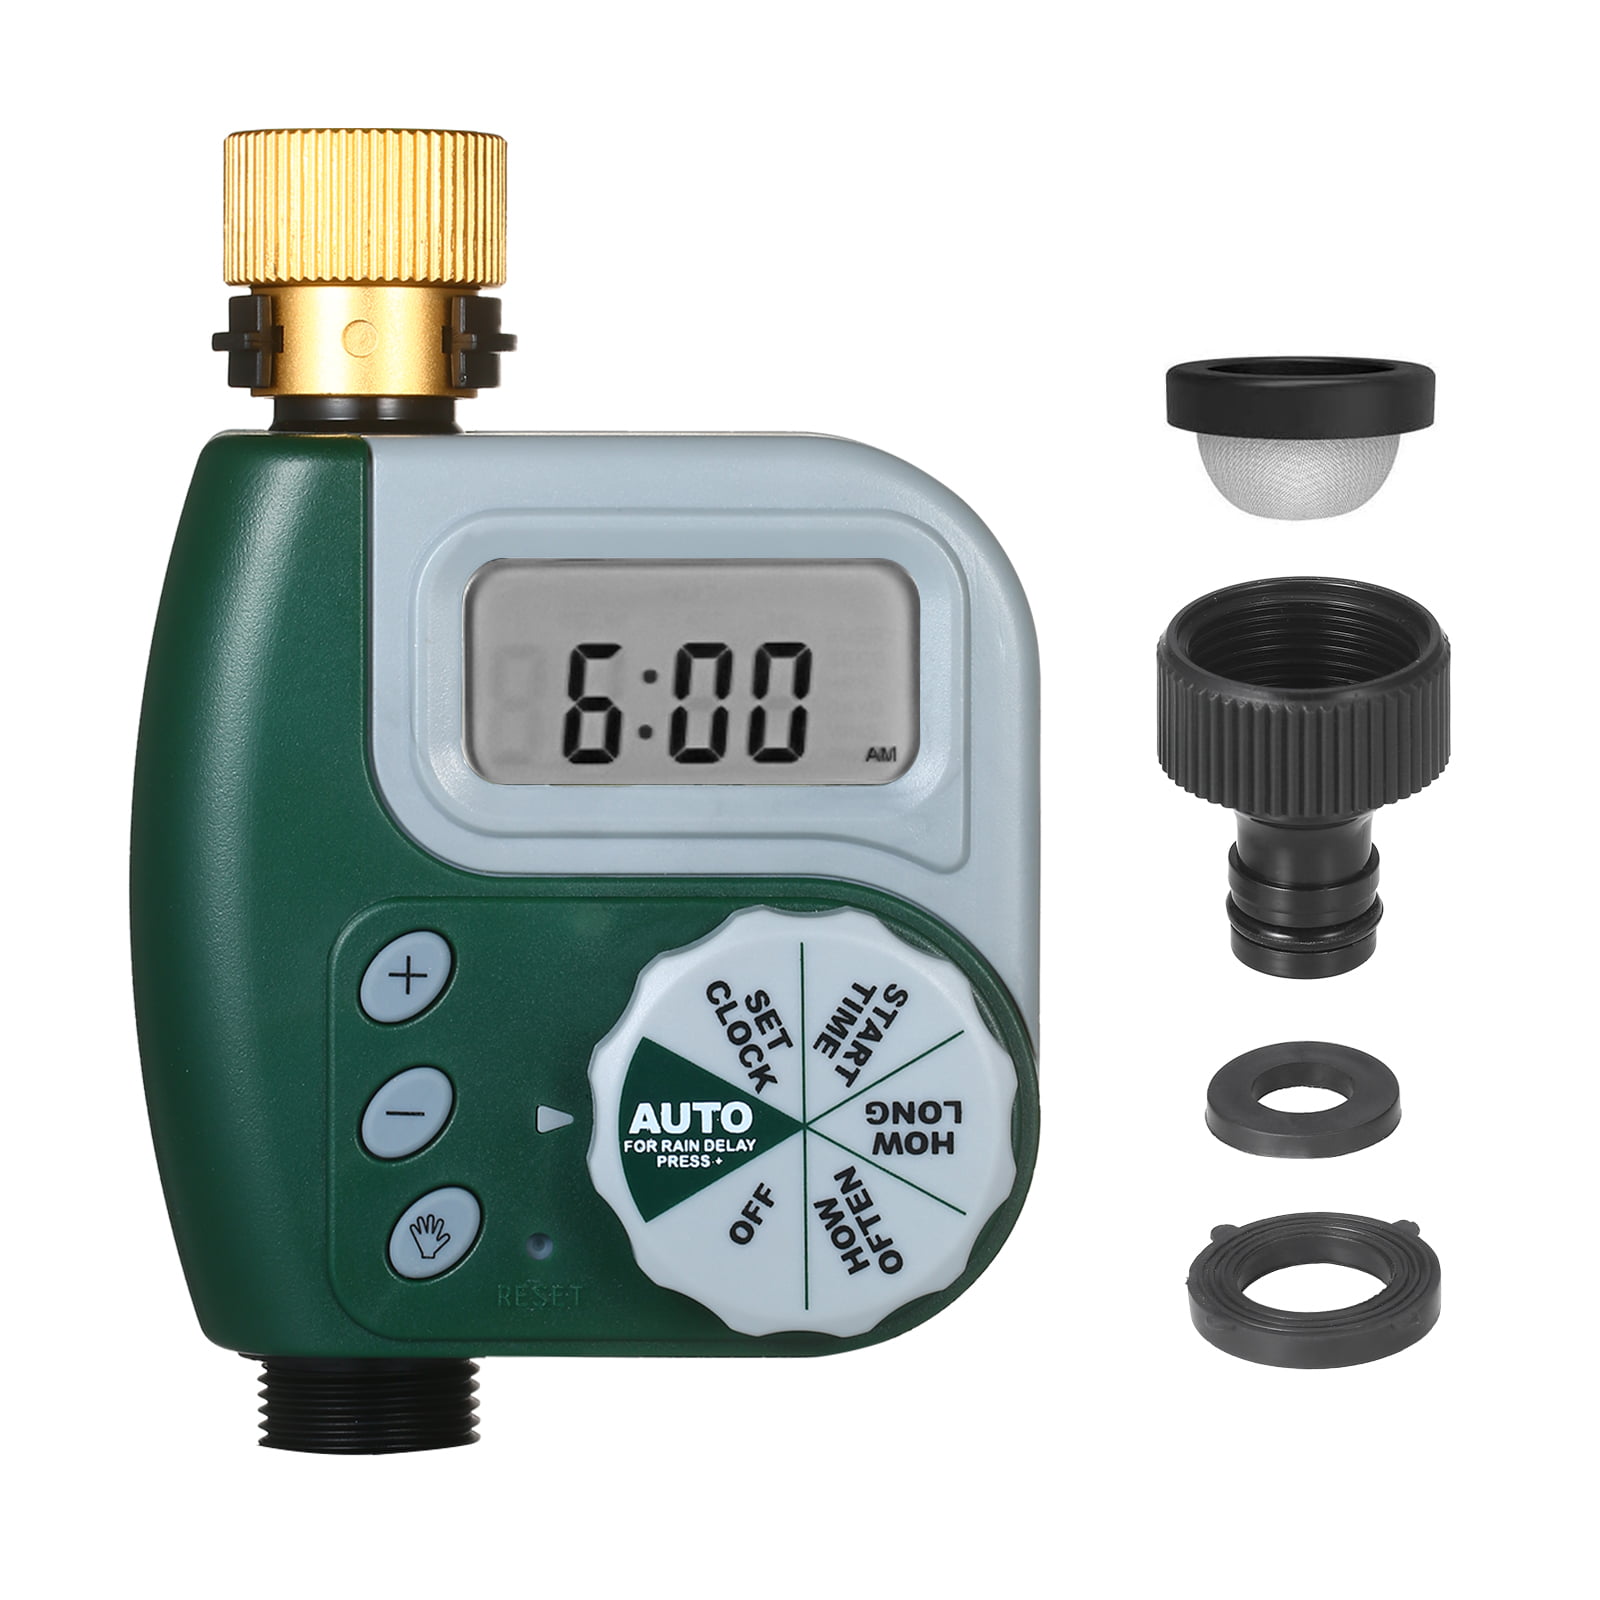 Digital Watering Timer Irrigation Controller Automatic Home Gardening Sprinkler 